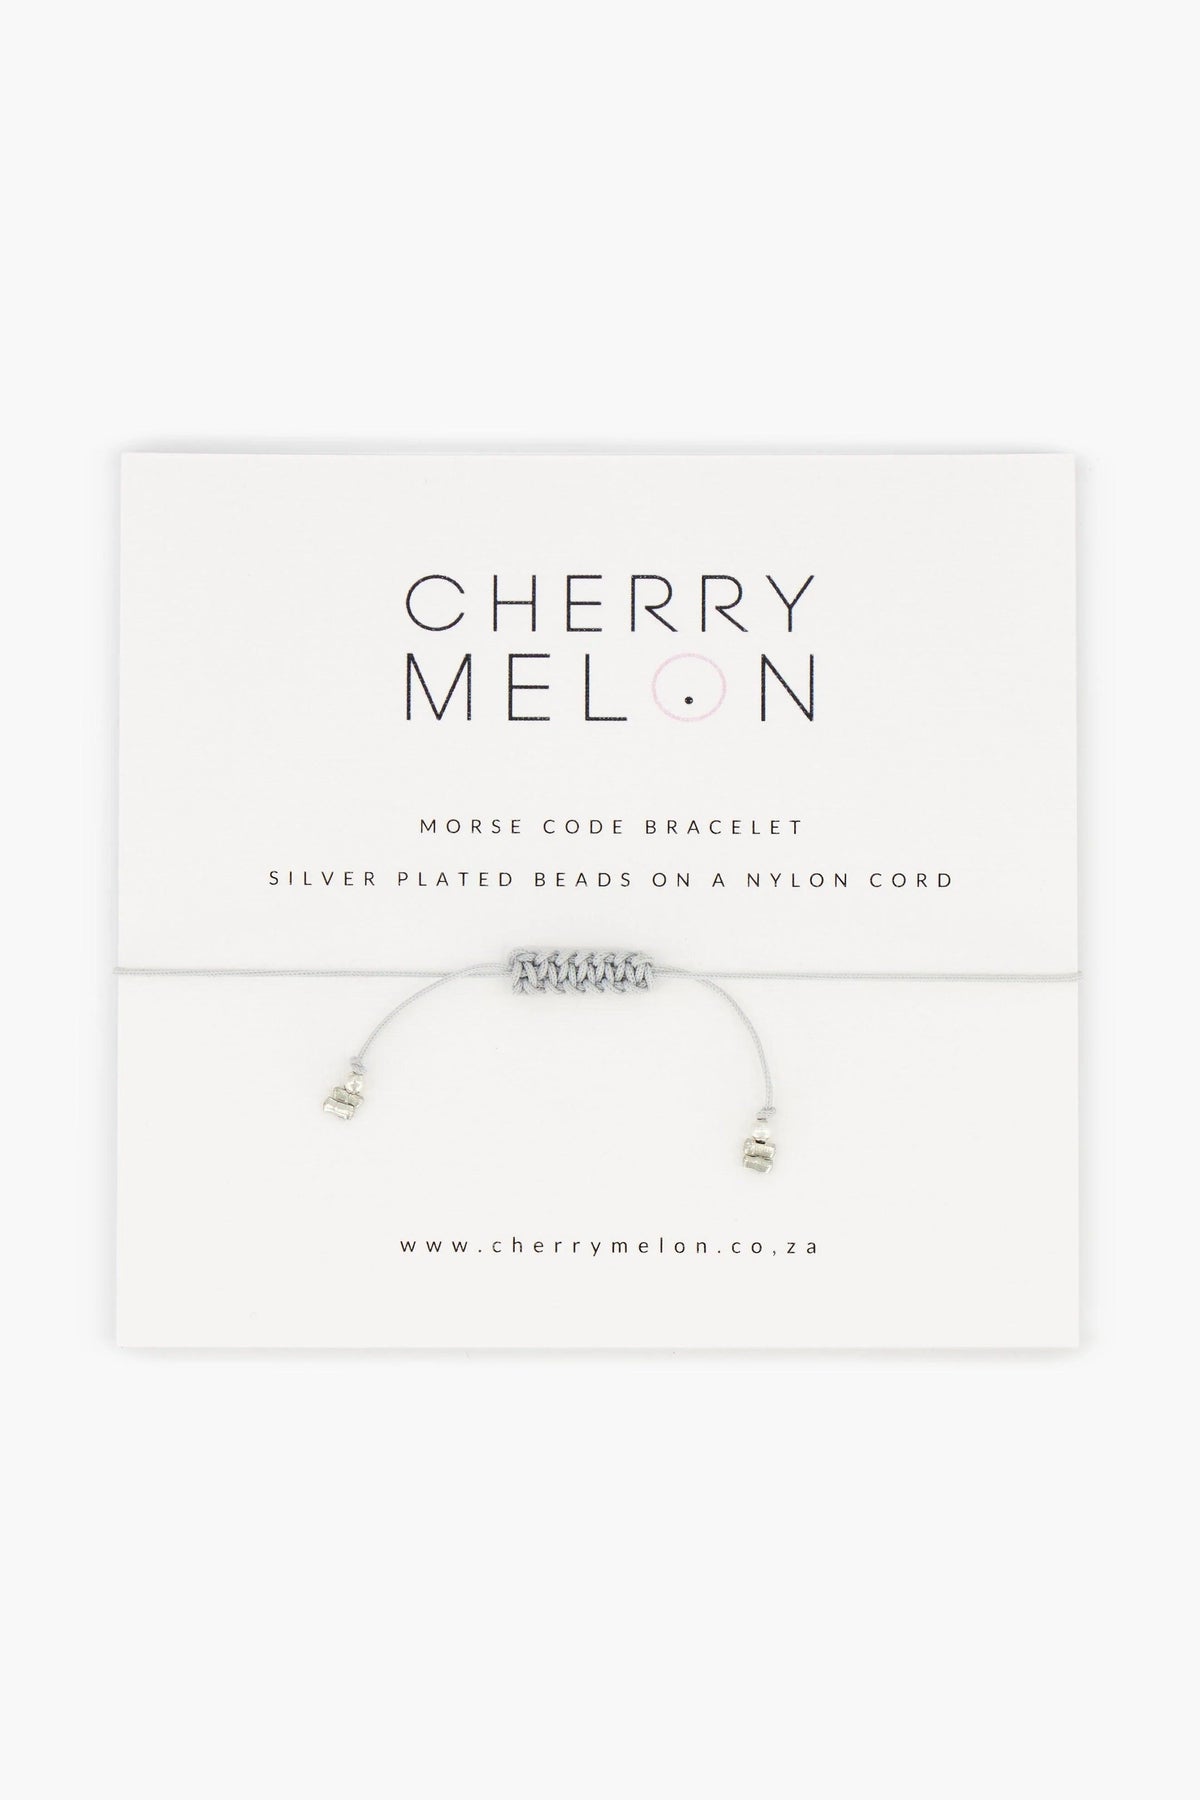 Morse Code Bracelet “Courage” - Cherry Melon